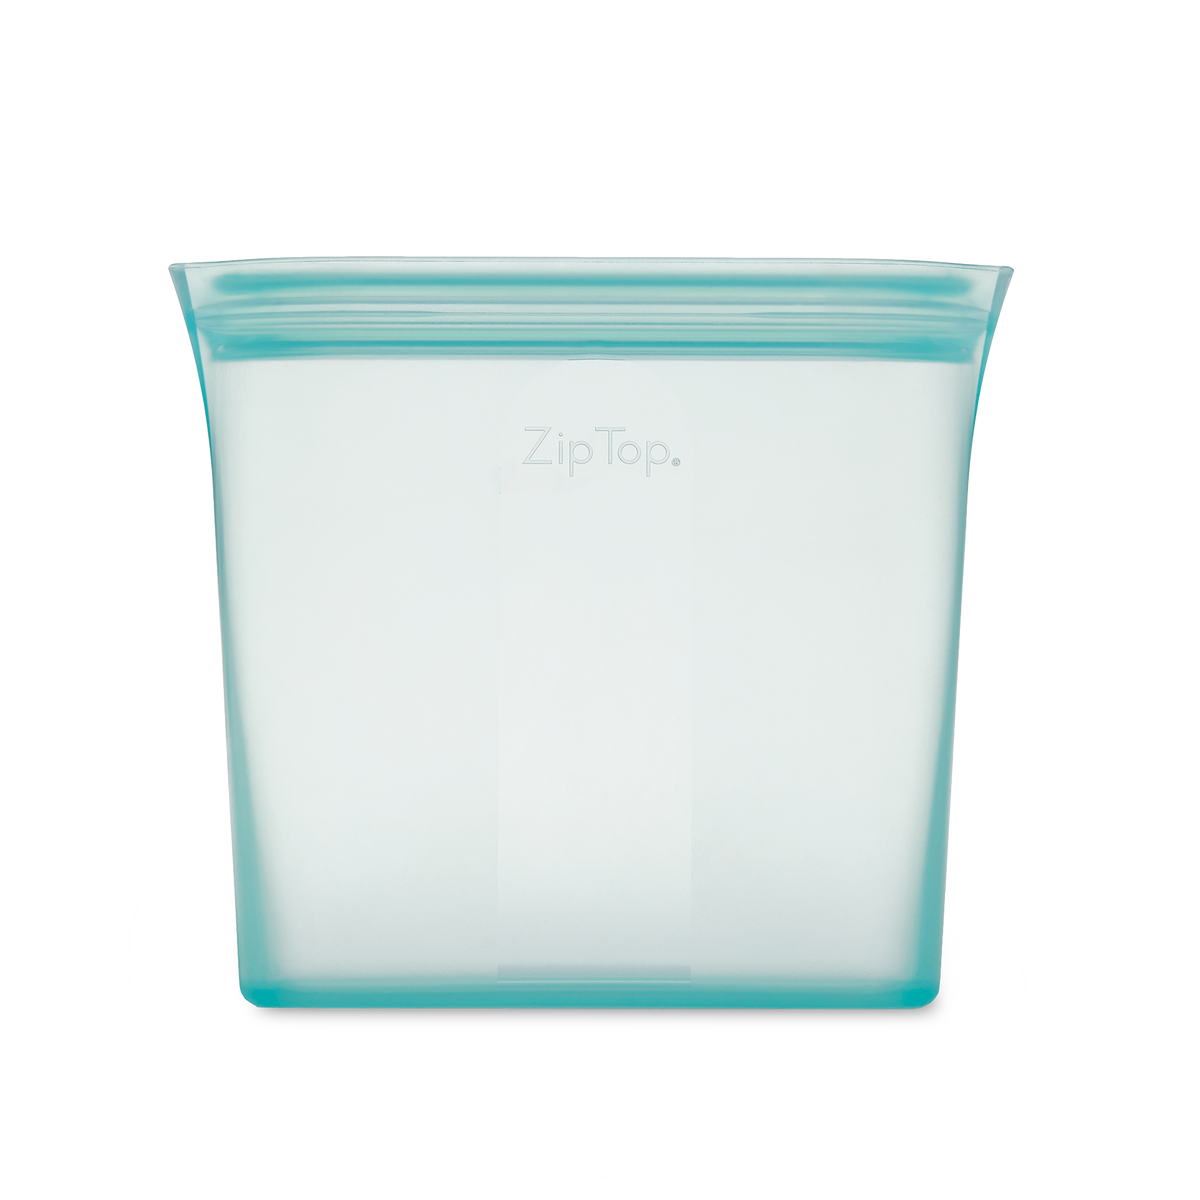 ZipTop Frost Reusable Sandwich Bags & Snack Bag, Set of 3 + Reviews